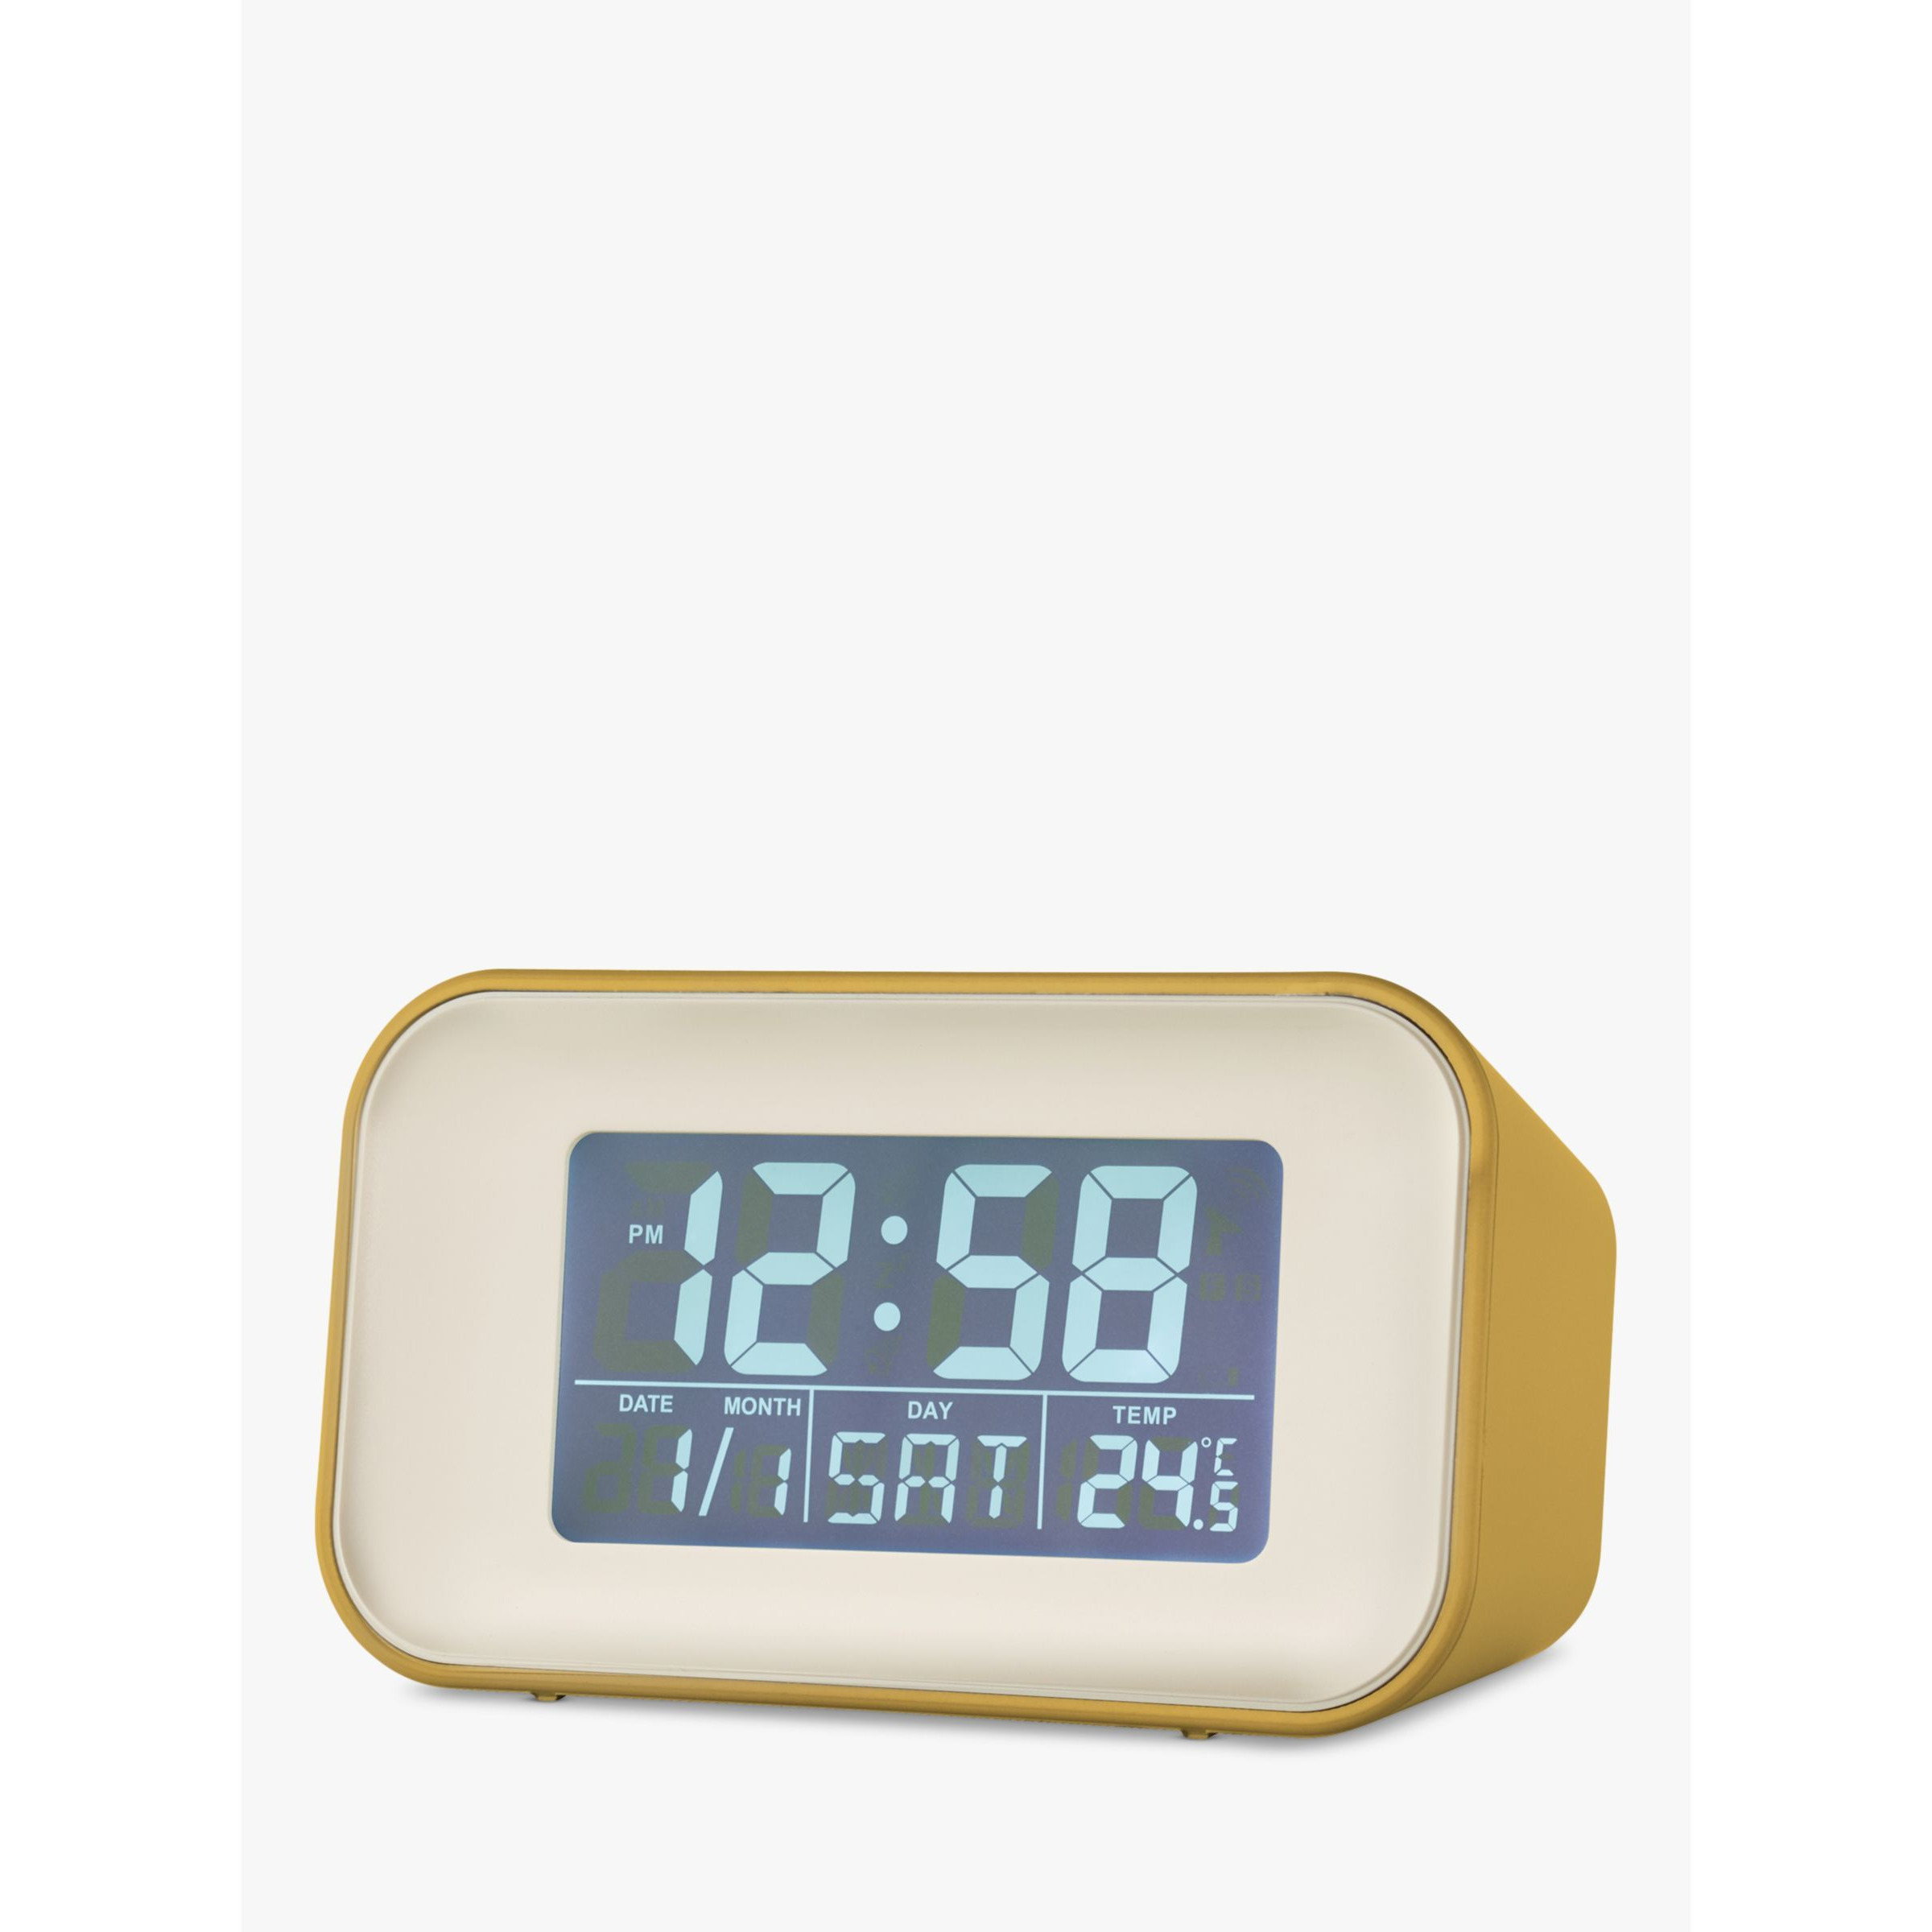 Acctim Alba Digital Alarm Clock - image 1